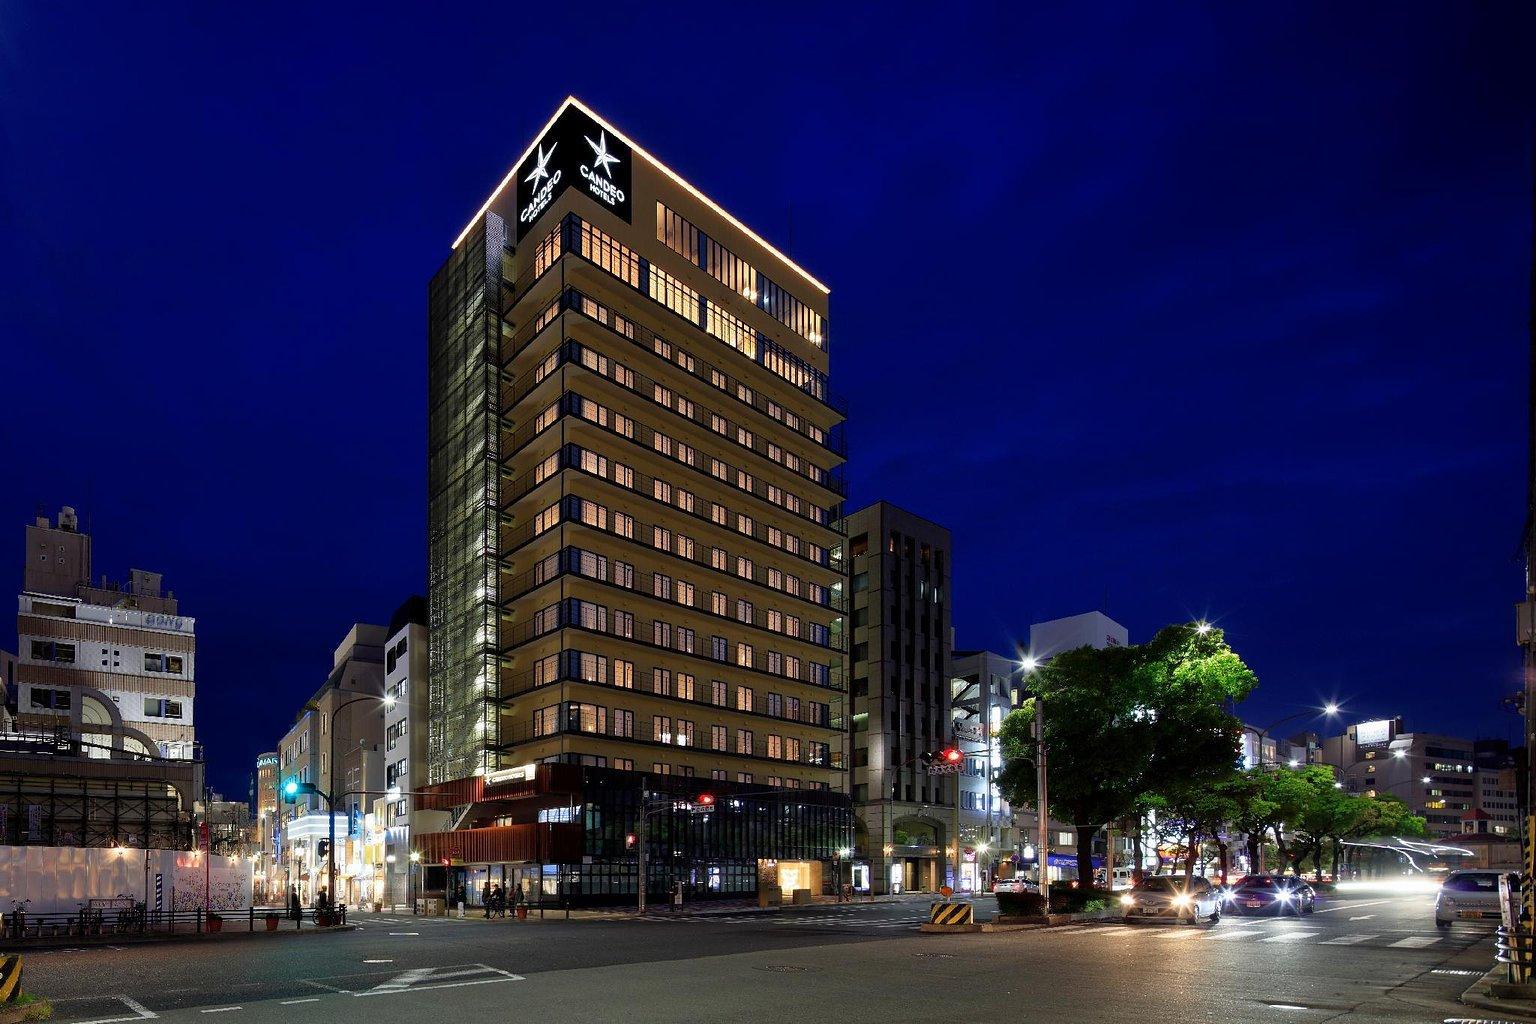 神戸东亚之路光芒酒店 / Candeo Hotels Kobe Tor road